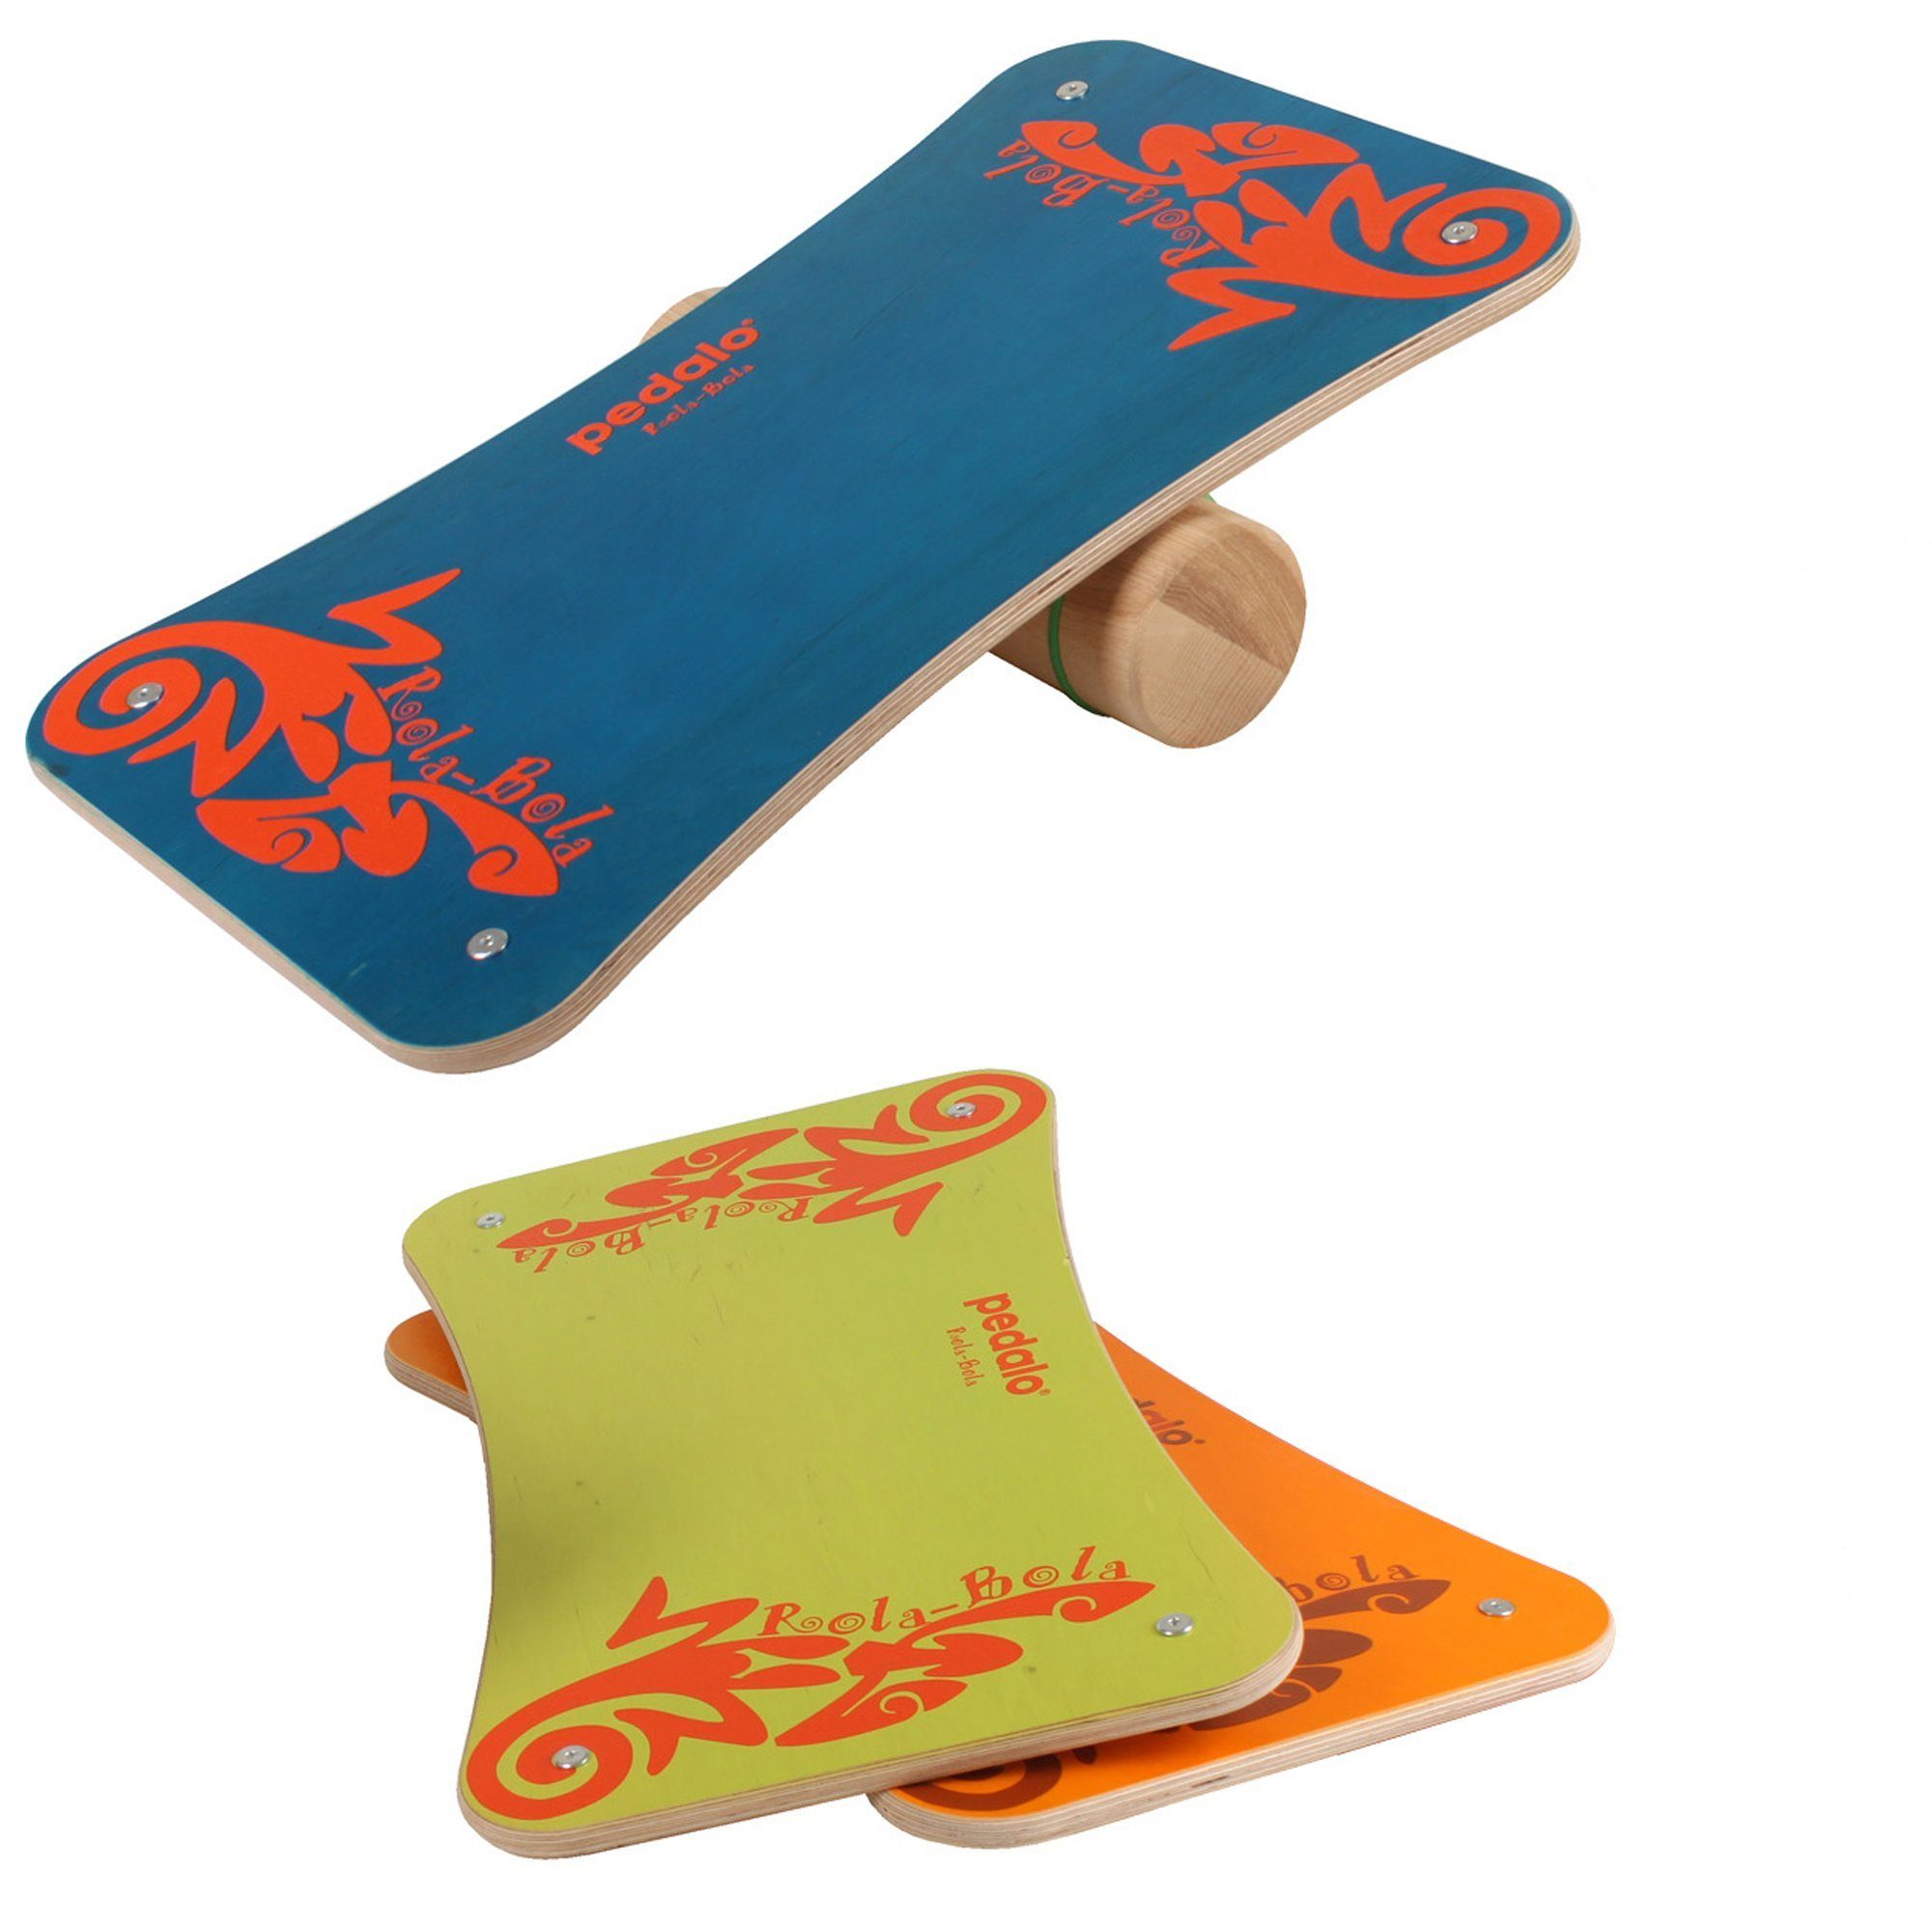 pedalo® Balanceboard Pedalo Rola-Bola Balanceboard, Gleichgewichtstrainer, Reflextrainer grün